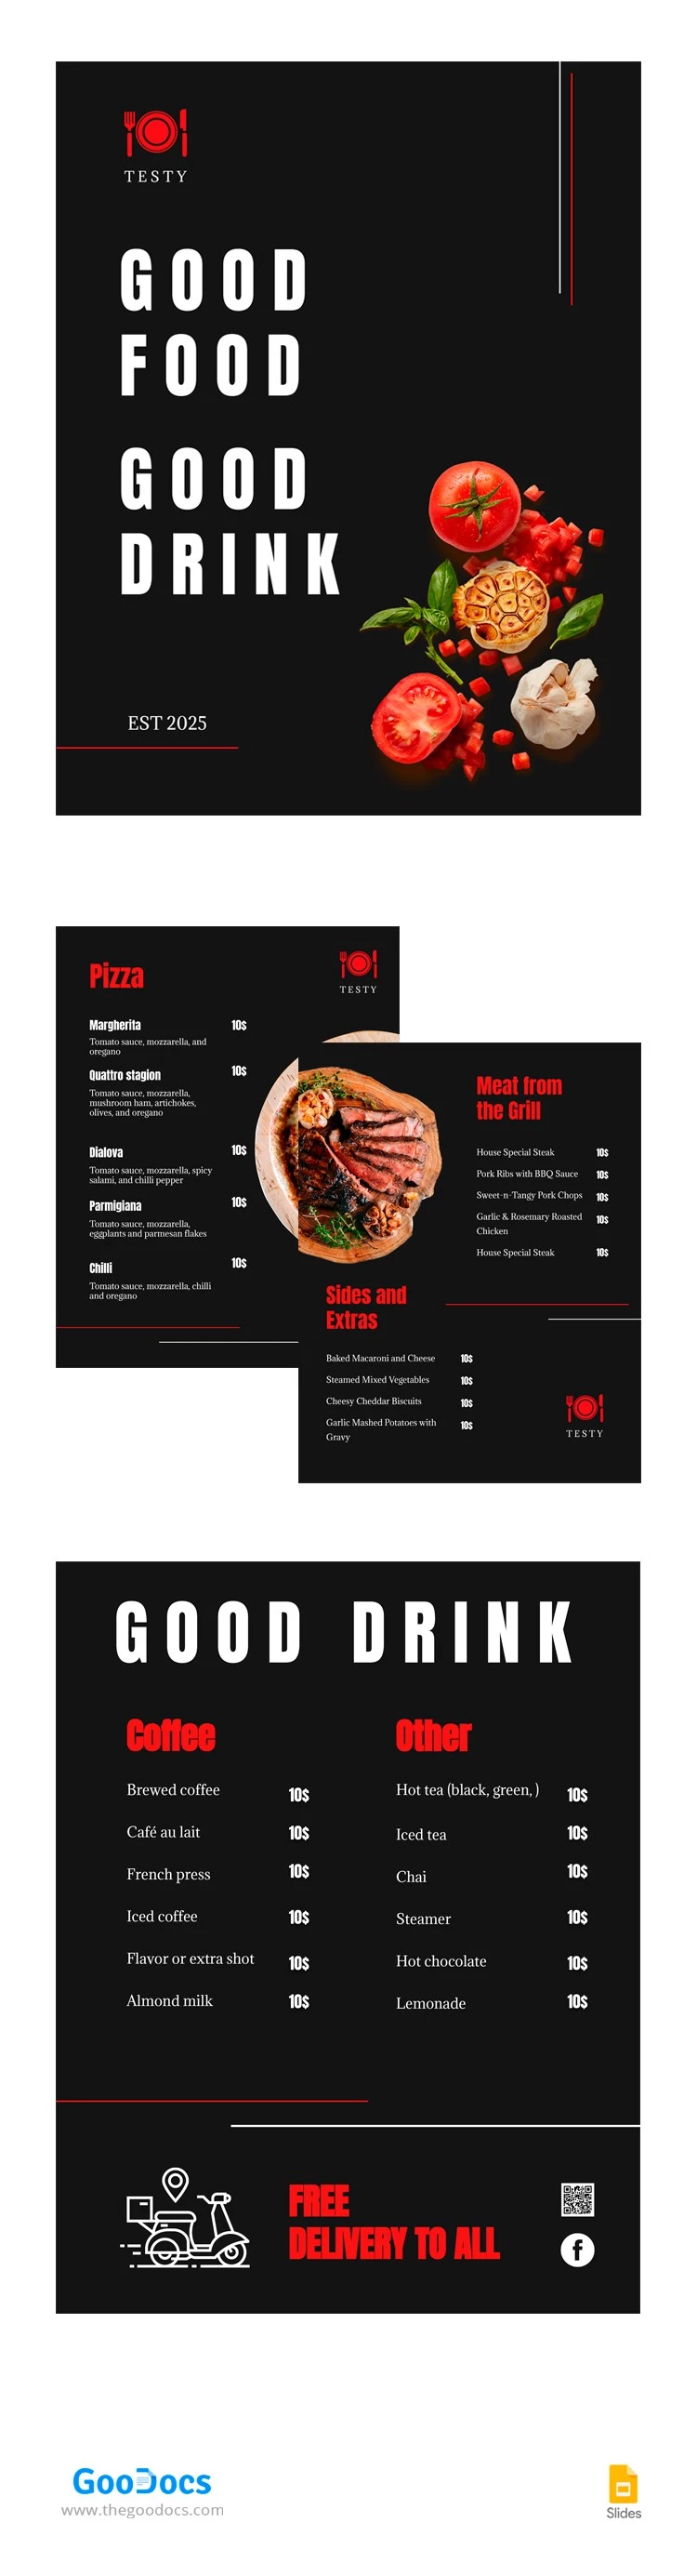 Good Food Menu - free Google Docs Template - 10063077